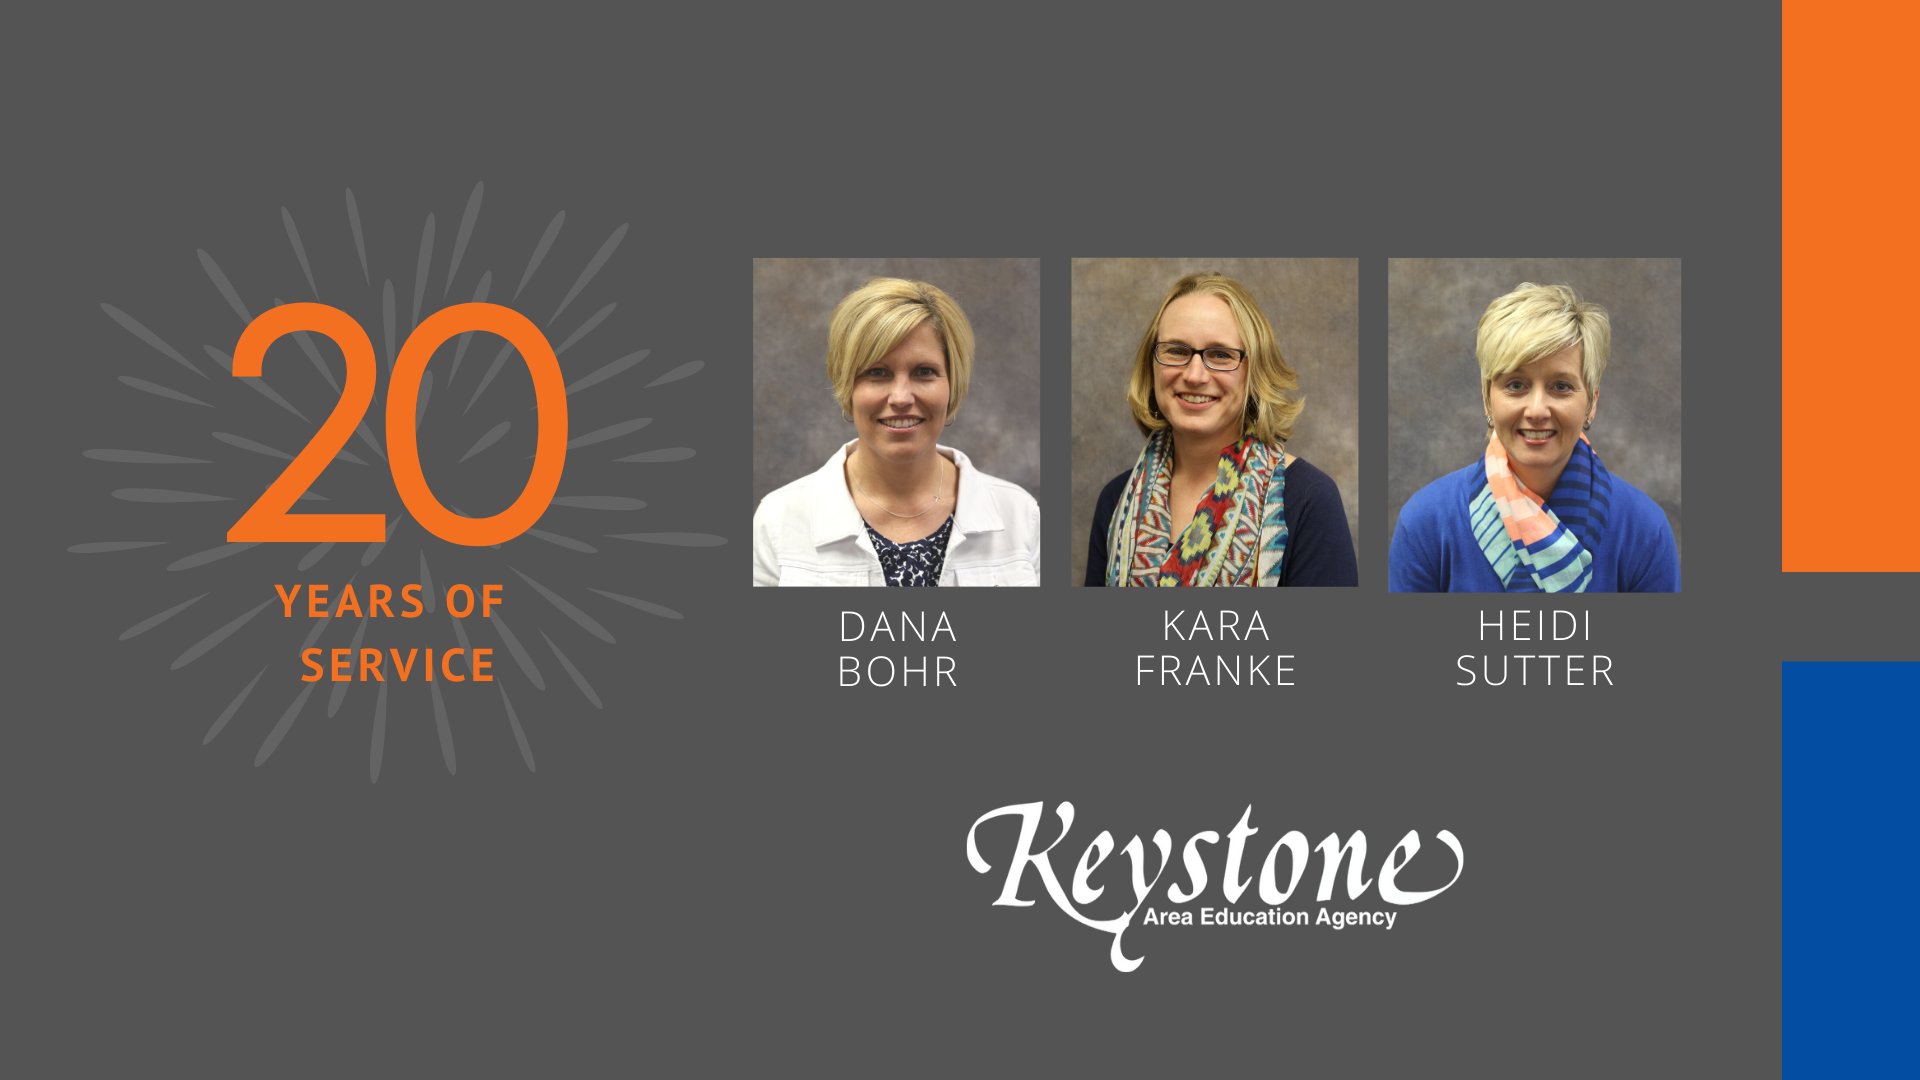 Beroligende middel korn Begge Keystone AEA on Twitter: "A big congratulations to Dana Bohr, Kara Franke,  and Heidi Sutter as you celebrate 20 years of service at Keystone AEA!  #GroundedInService https://t.co/fHaTn5Jm5z" / Twitter